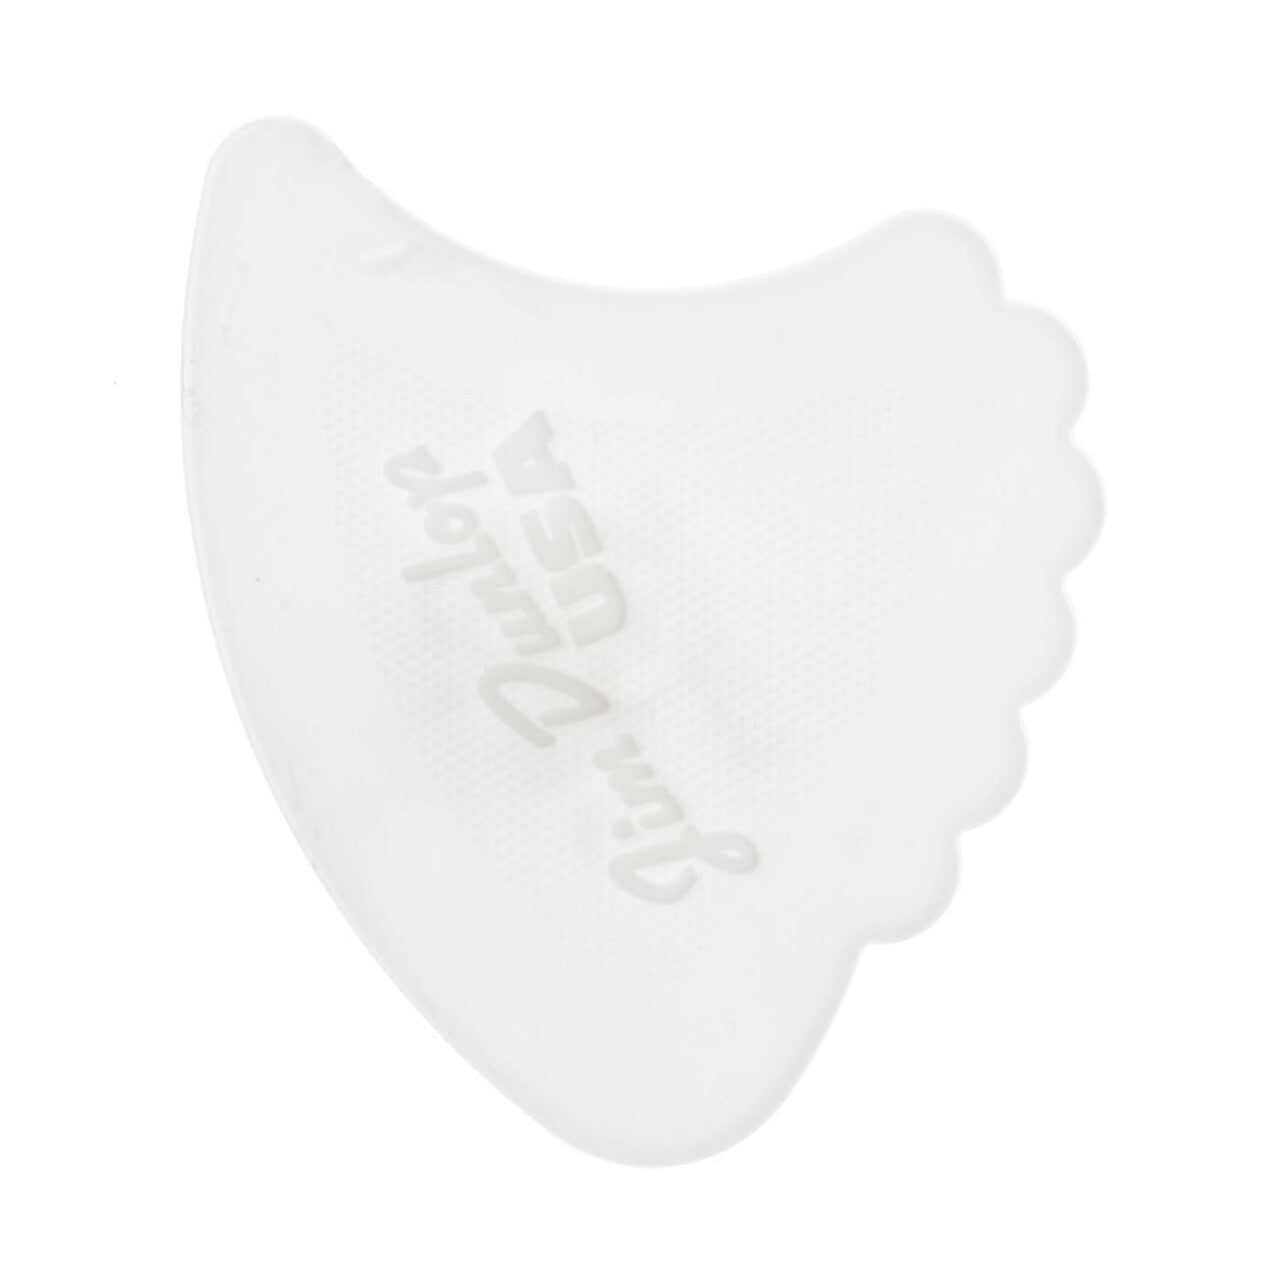 6 X Jim Dunlop Nylon Fins Guitar Pick 0.53mm - Reco Music Malaysia